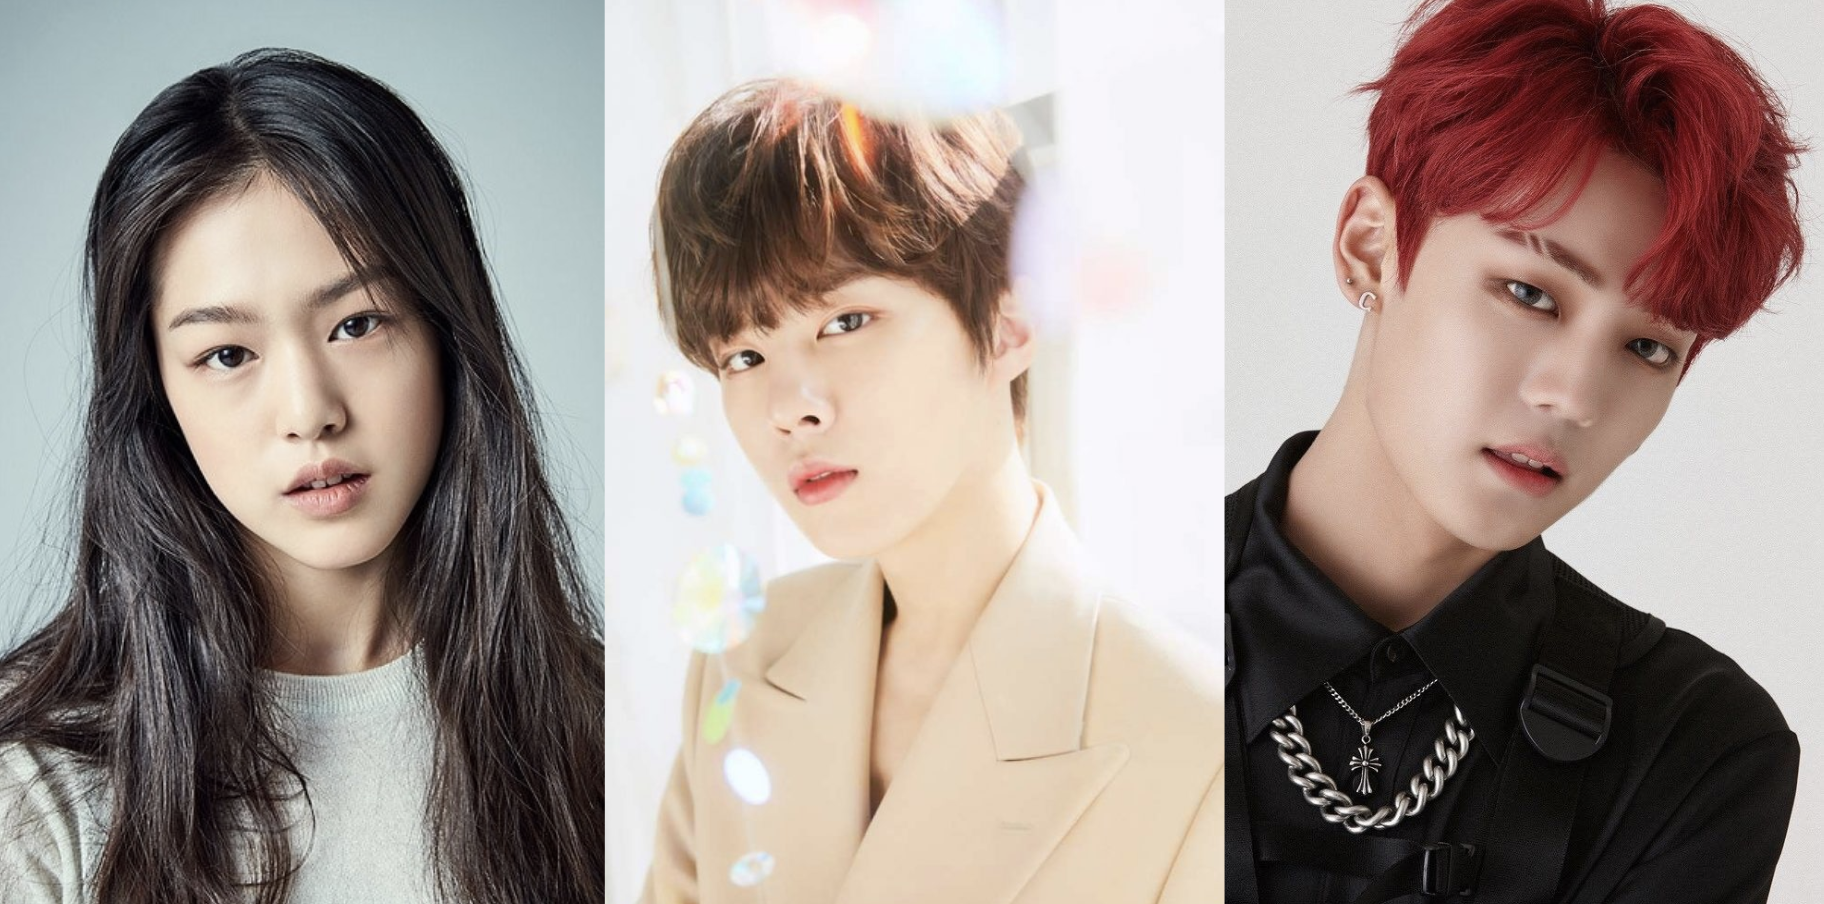 More confirmed cast join Kim Woo Seok in ‘Twenty-twenty’